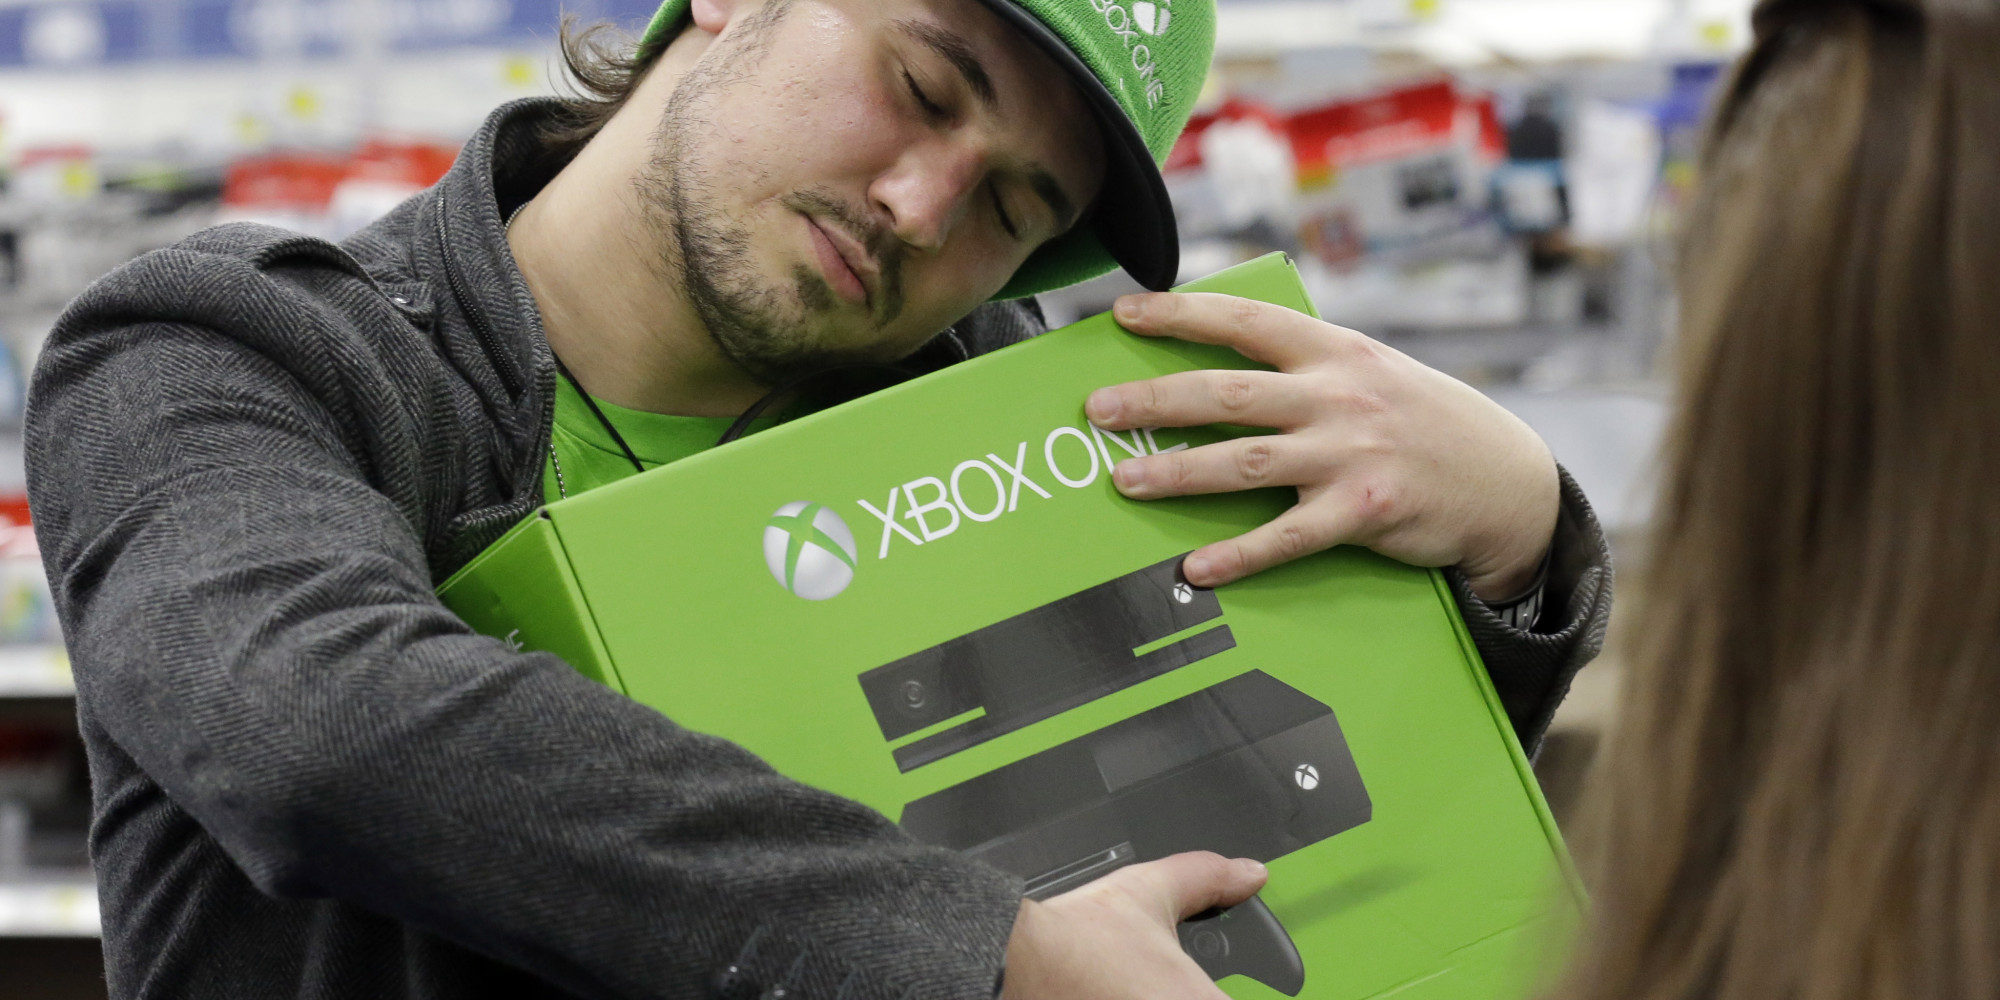 Американец заставил сына разбить Xbox из-за неуспеваемости в школе